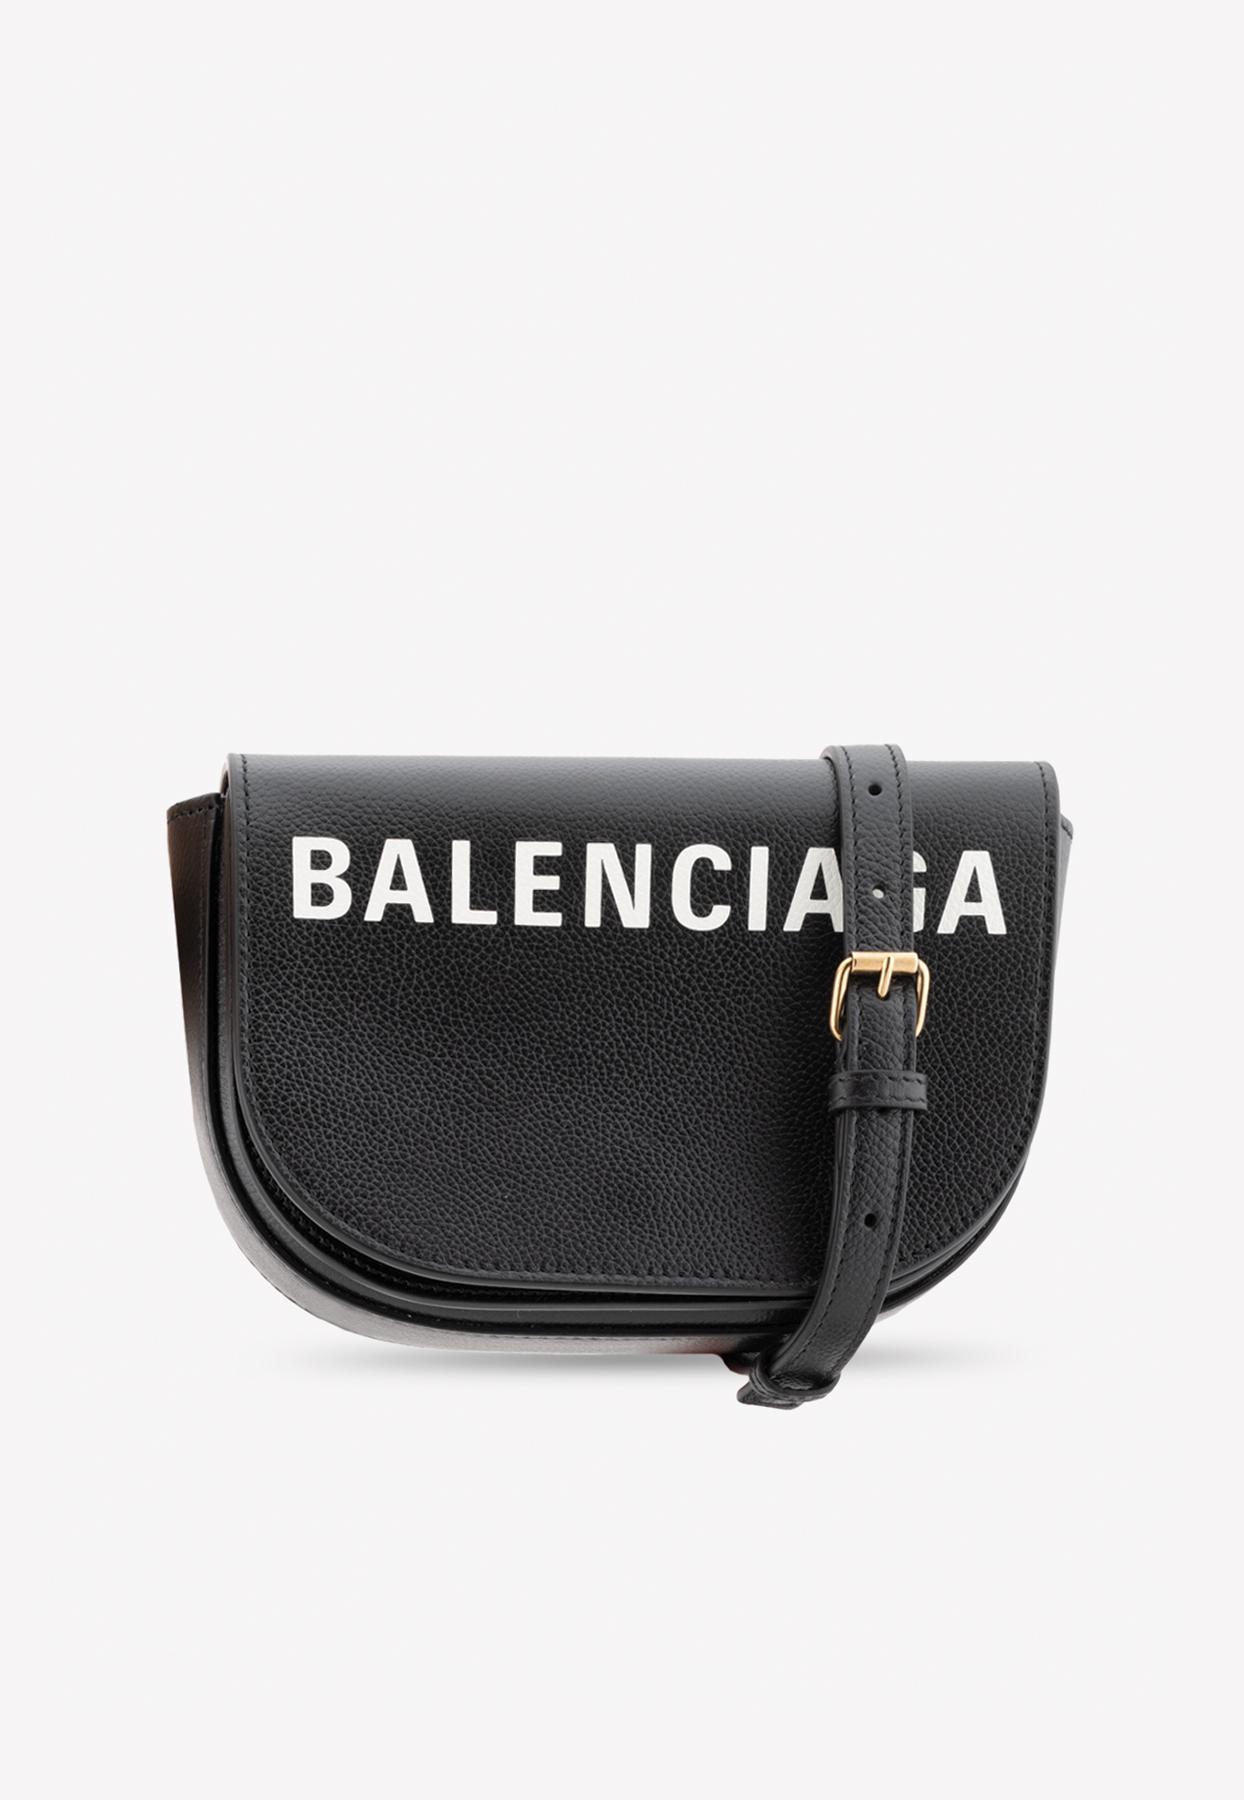 Balenciaga Ville Day Leather Crossbody Bag in Black/White (Black 